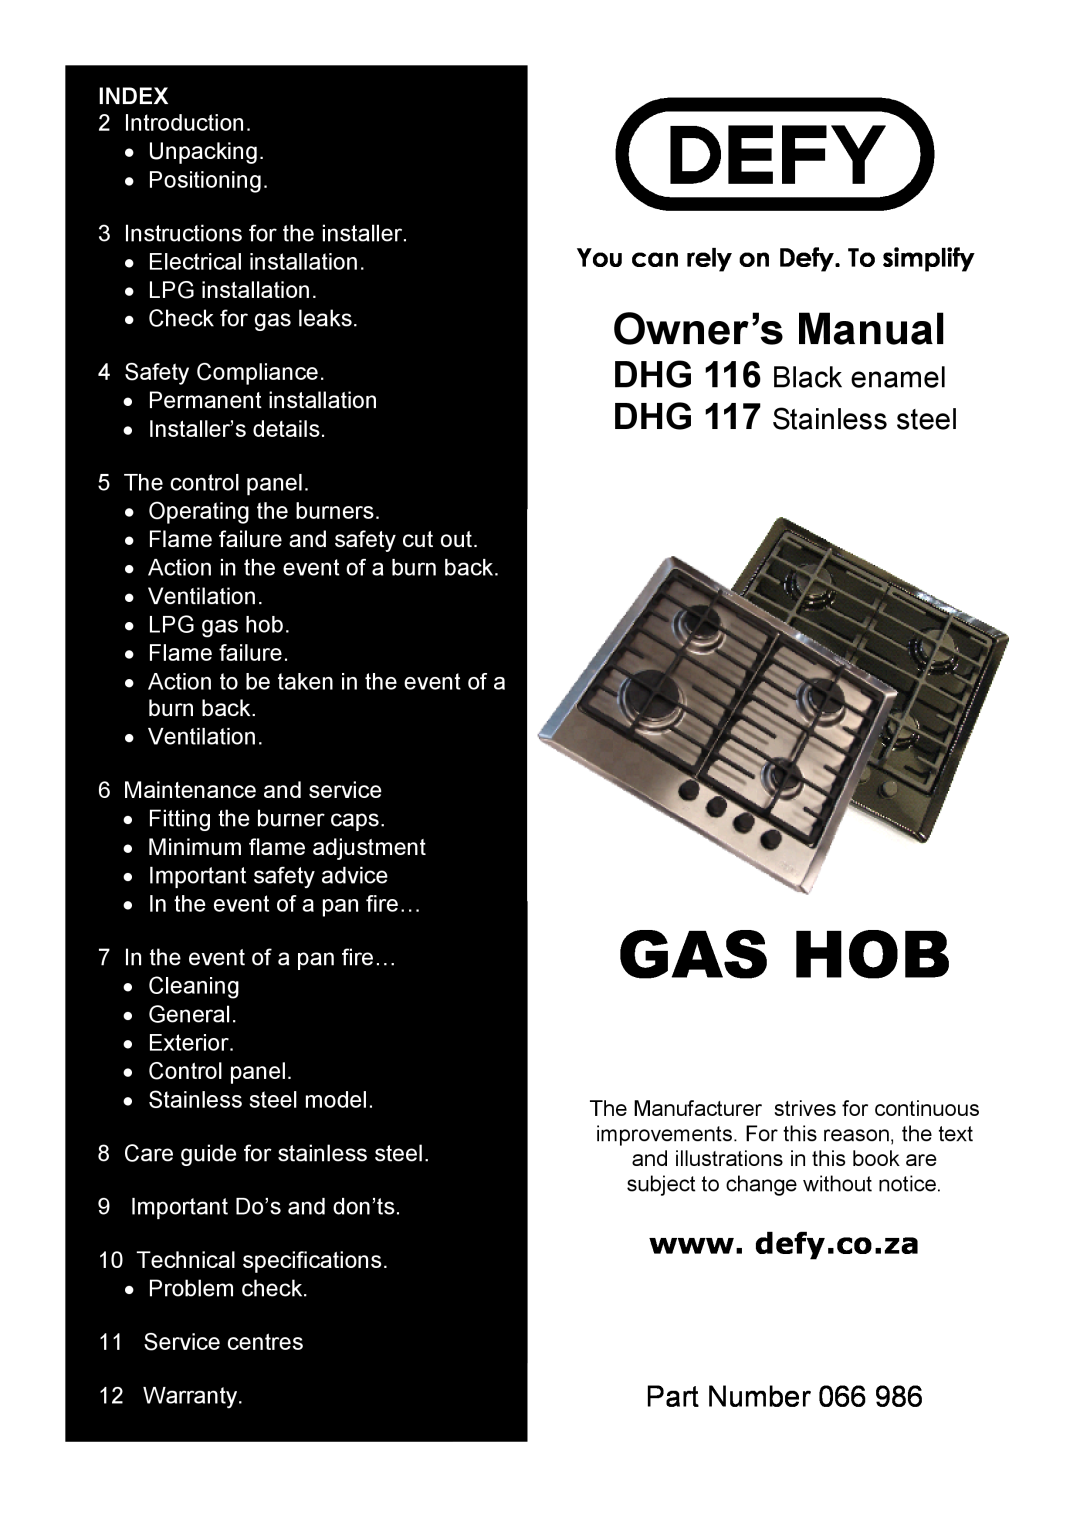 Defy Appliances DHG 117, DHG 116 manual ##$%#, $700 